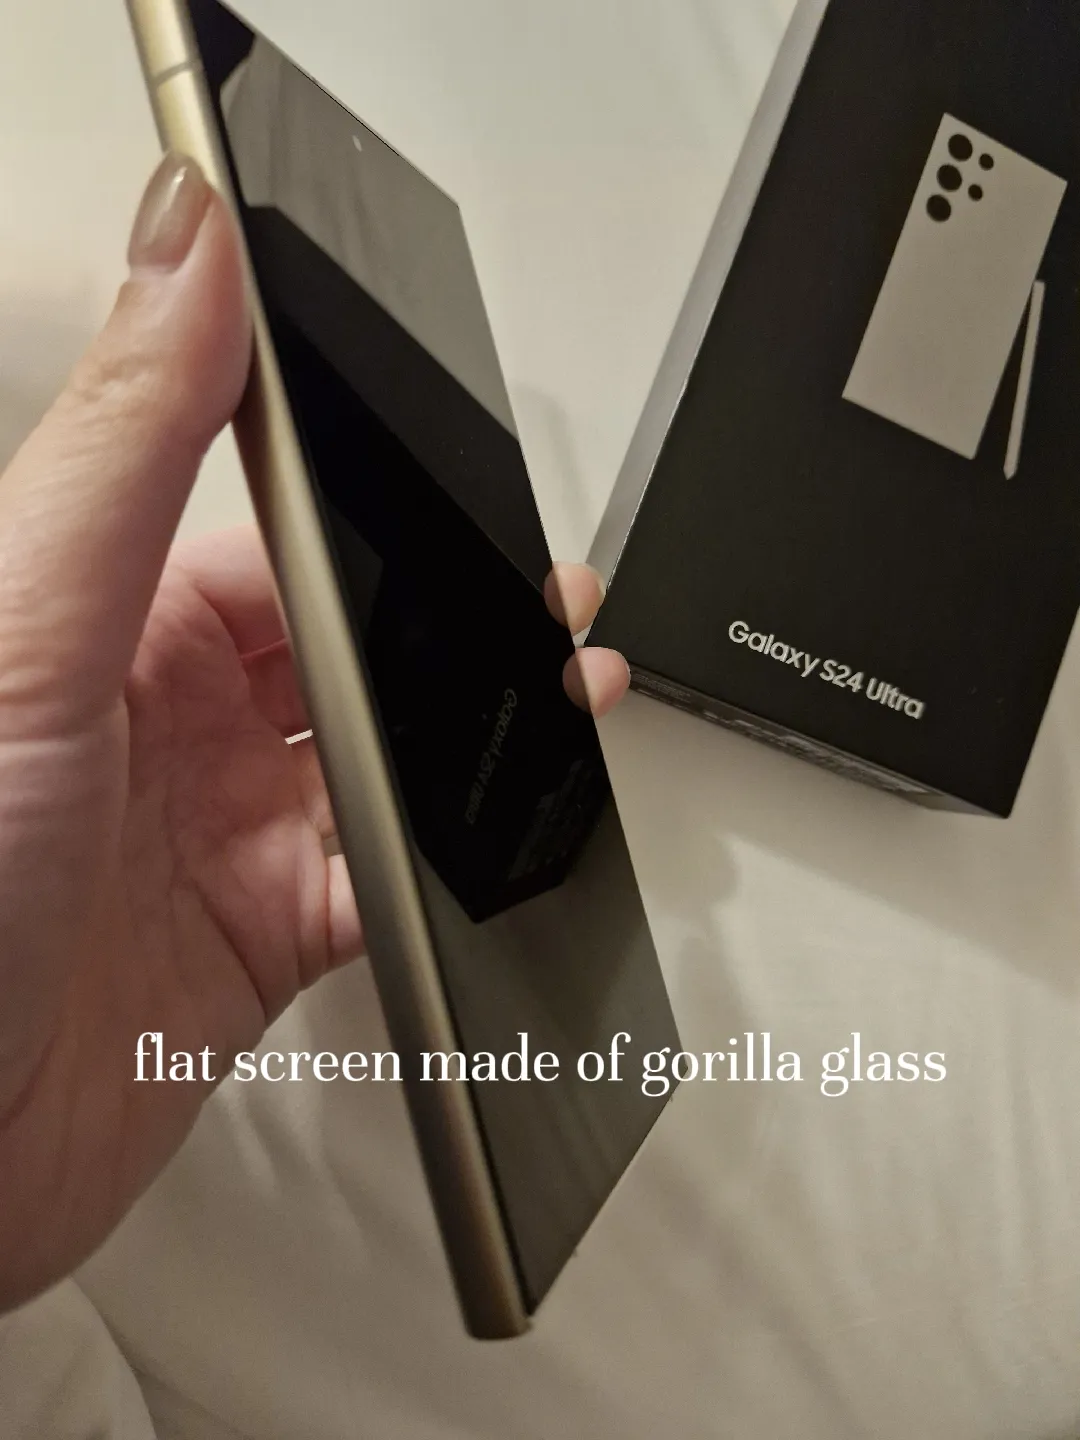 Unboxing  Samsung Galaxy S24 Ultra Titan Black 